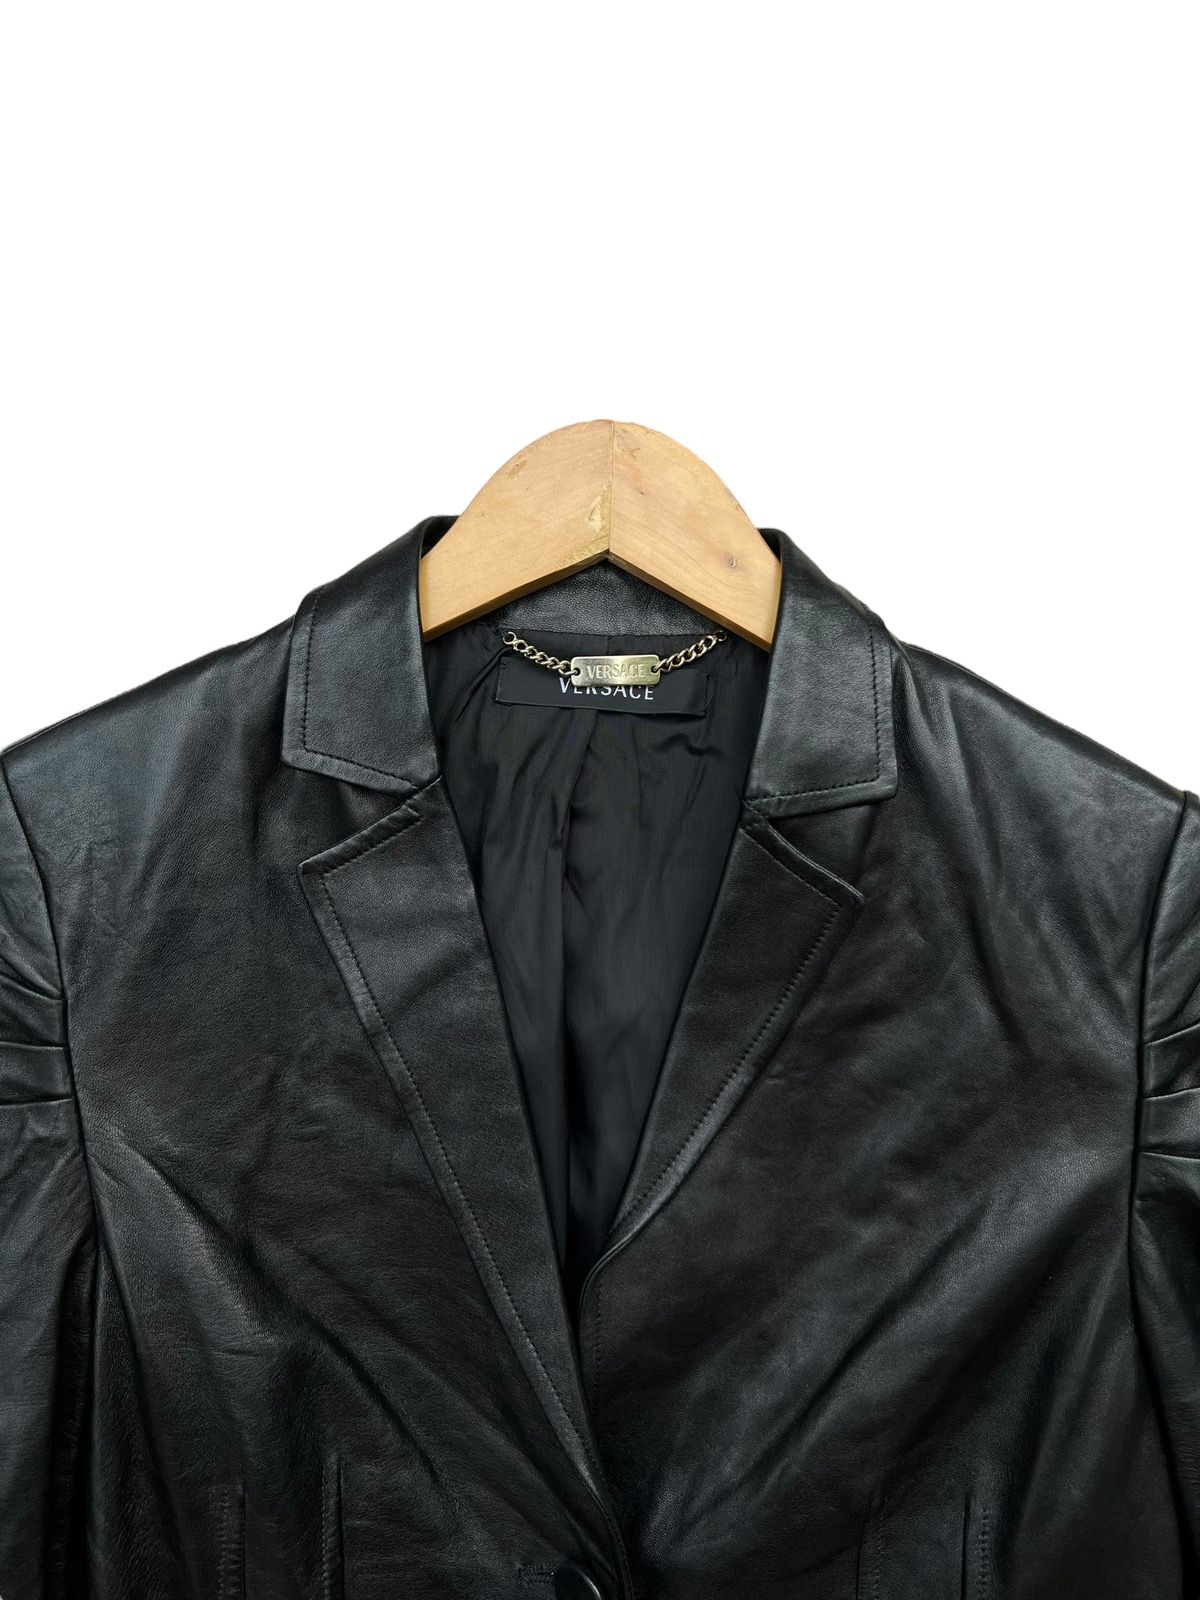 Versace Leather Jacket - 4